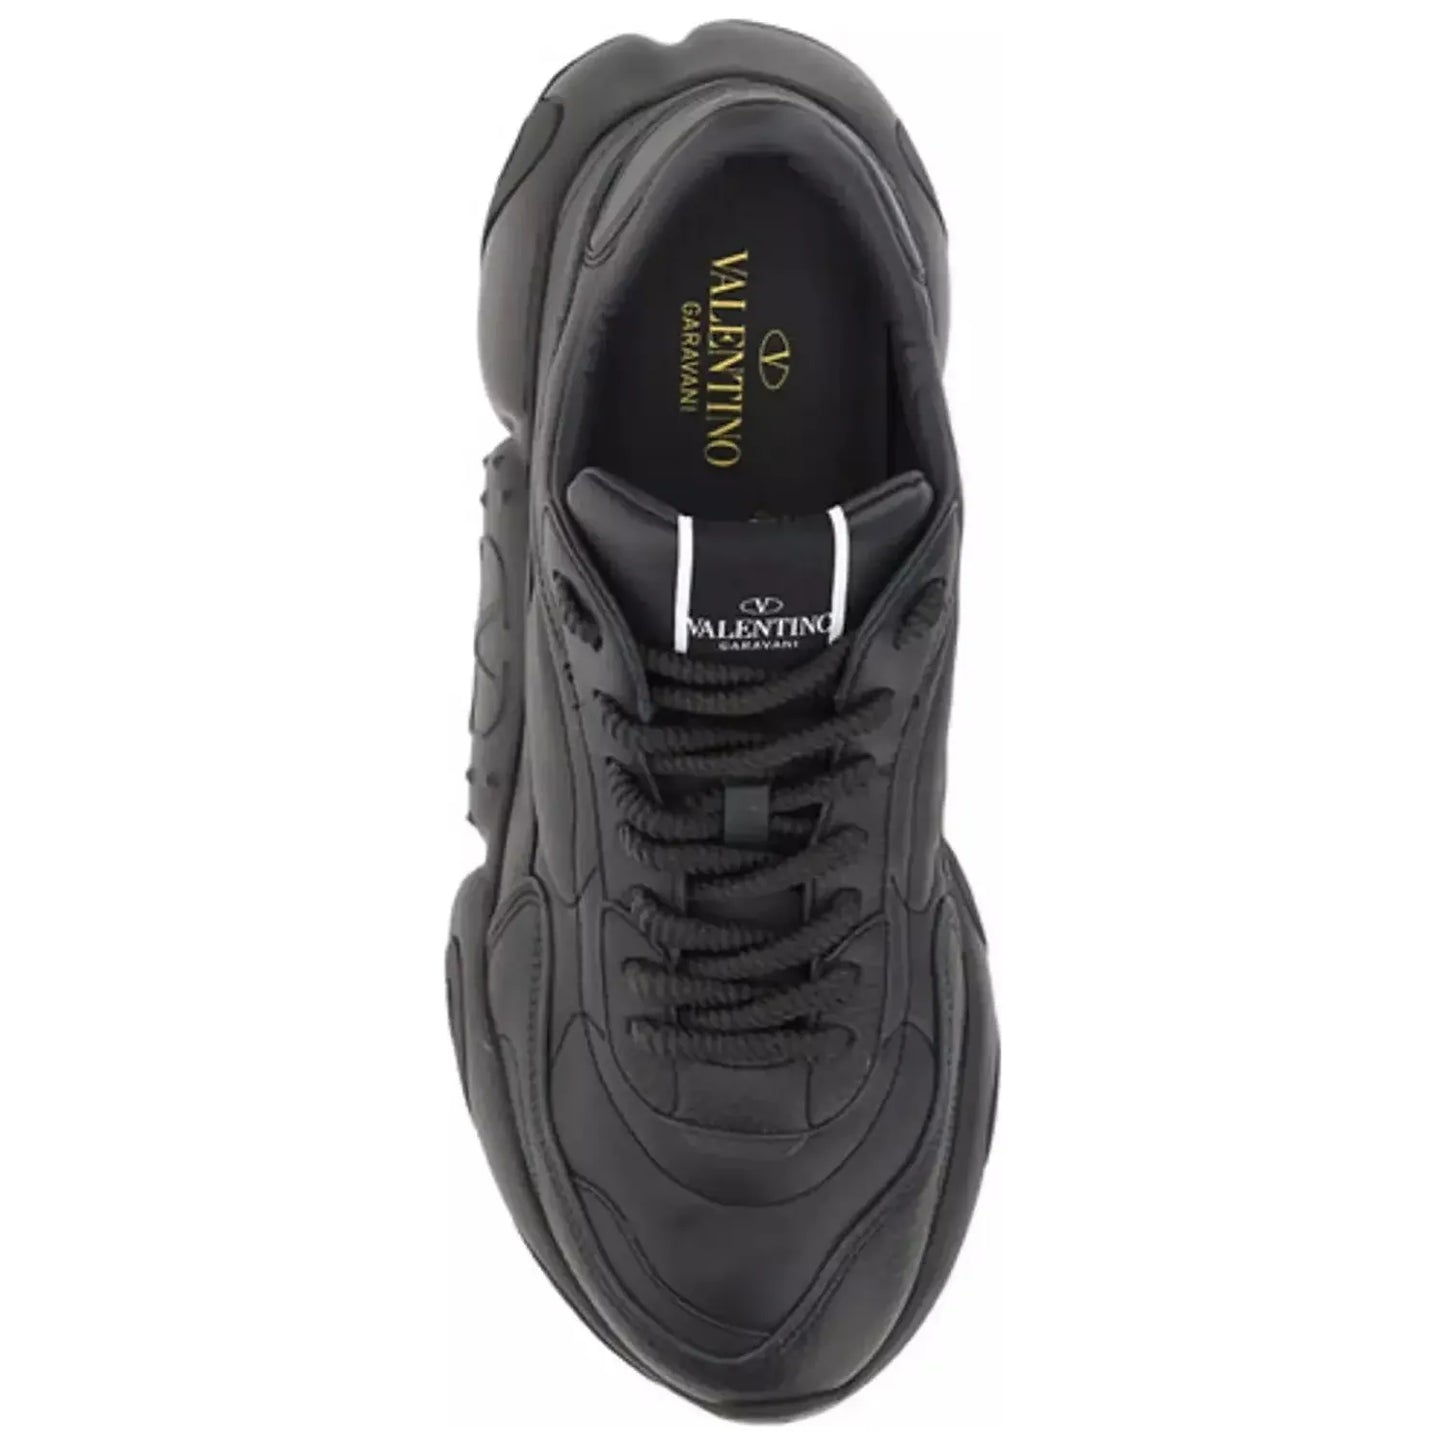 Valentino Elevated Elegance Low-Top Leather Sneakers MAN SNEAKERS black-calf-leather-garavani-sneakers 8cbf4a2243cfb5cf502619d4cd88a1fa-dbd6c472-fdc.webp